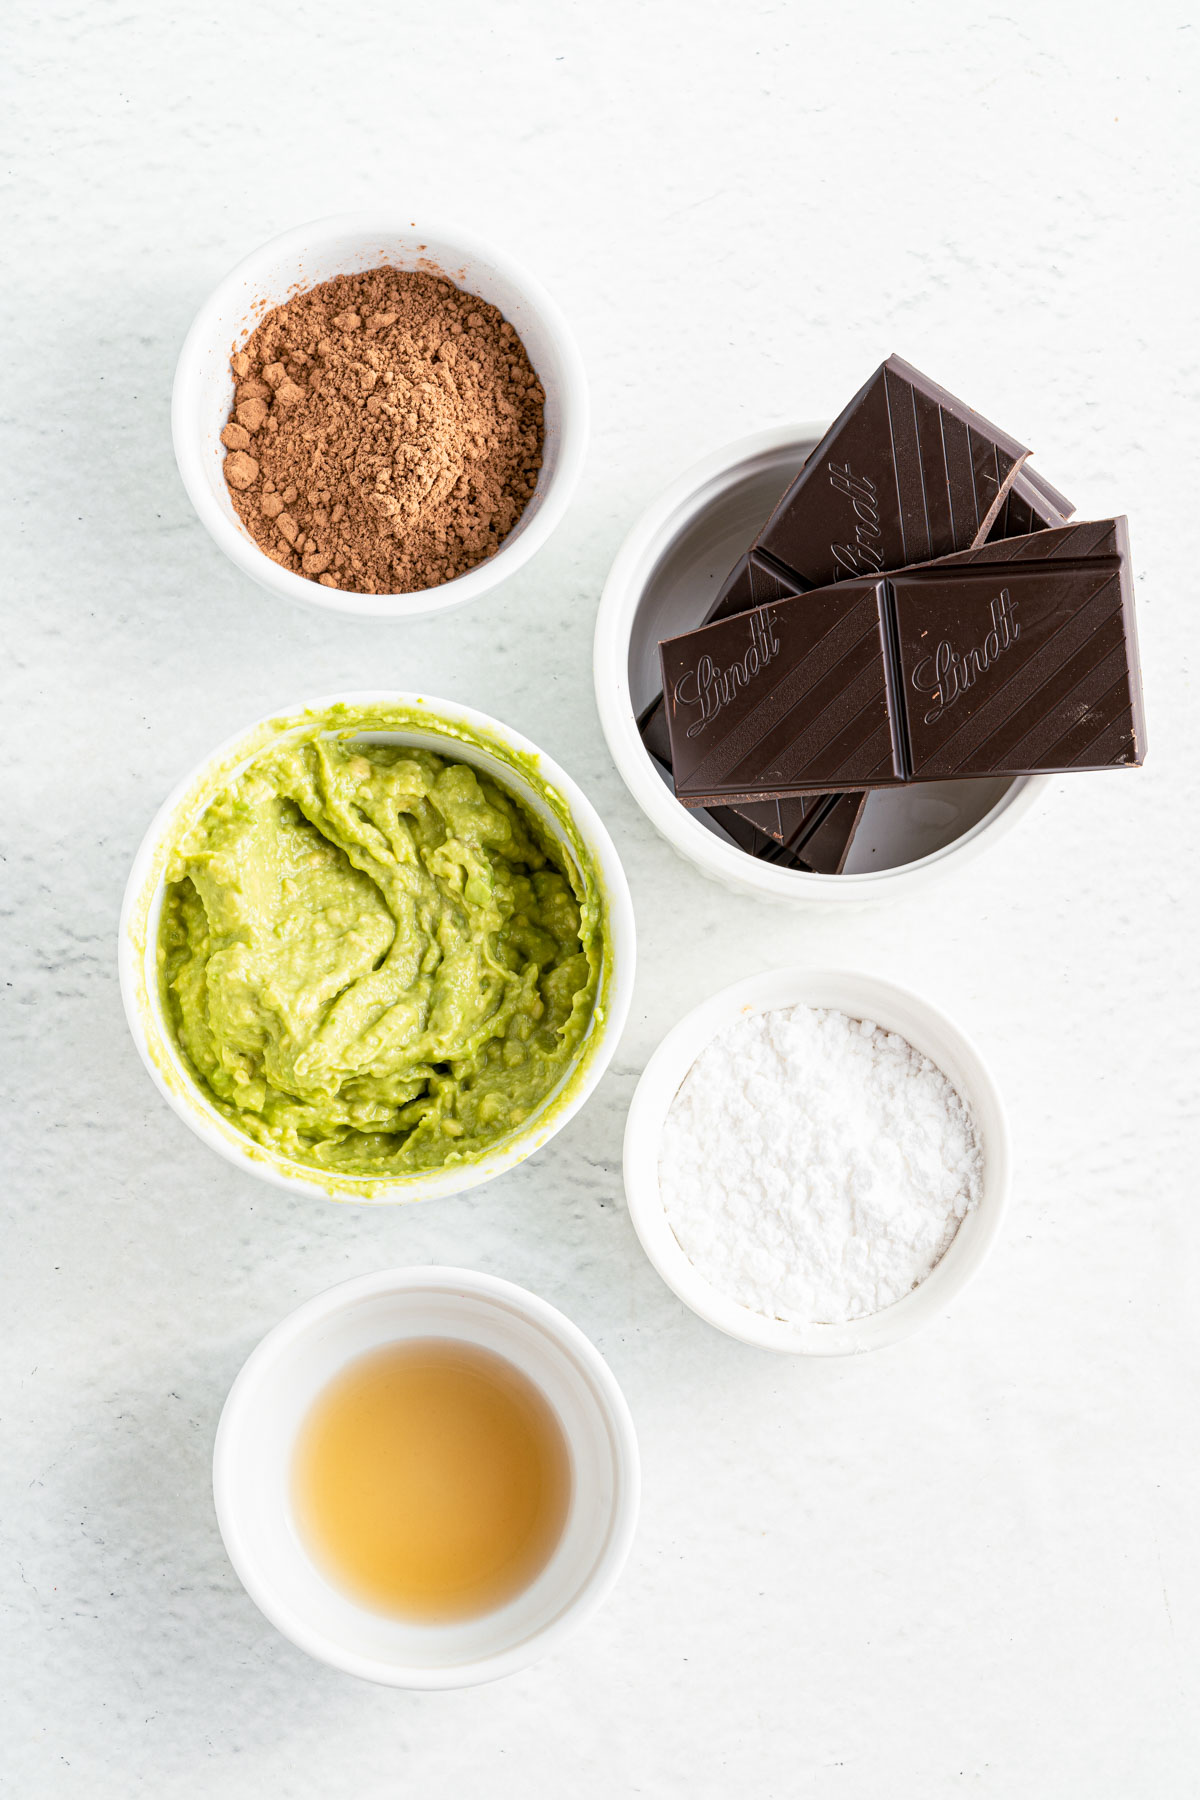 avocado truffle ingredients, including dark chocolate, cocoa powder, avocado mash, and erythritrol